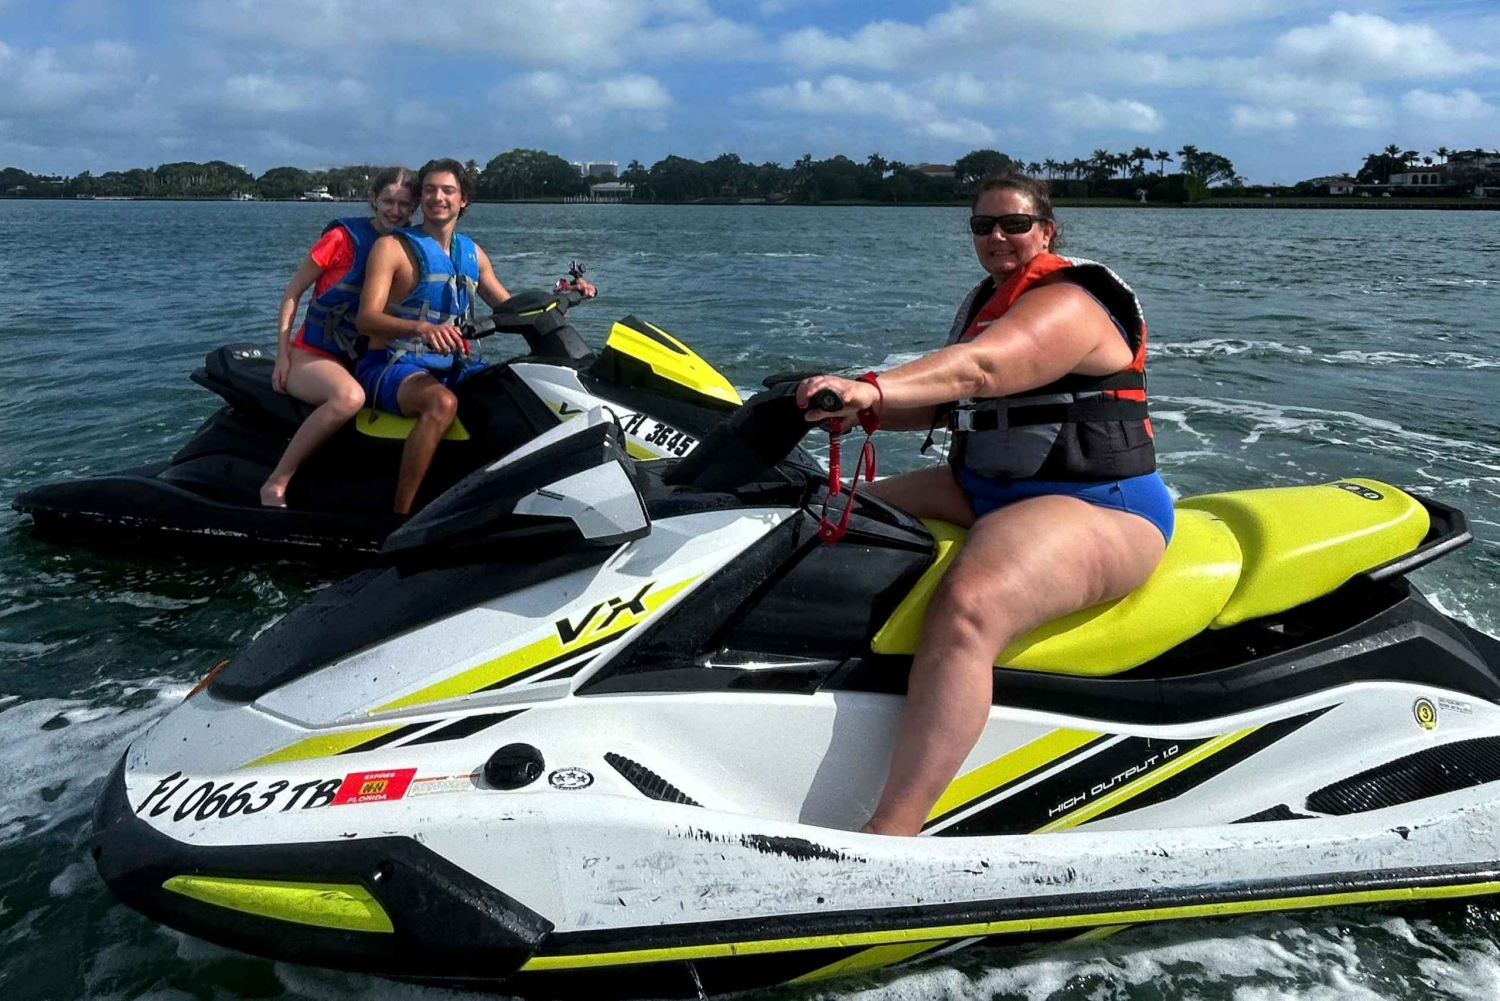 Miami Beach: Jet Ski Rental with Included Boat Ride